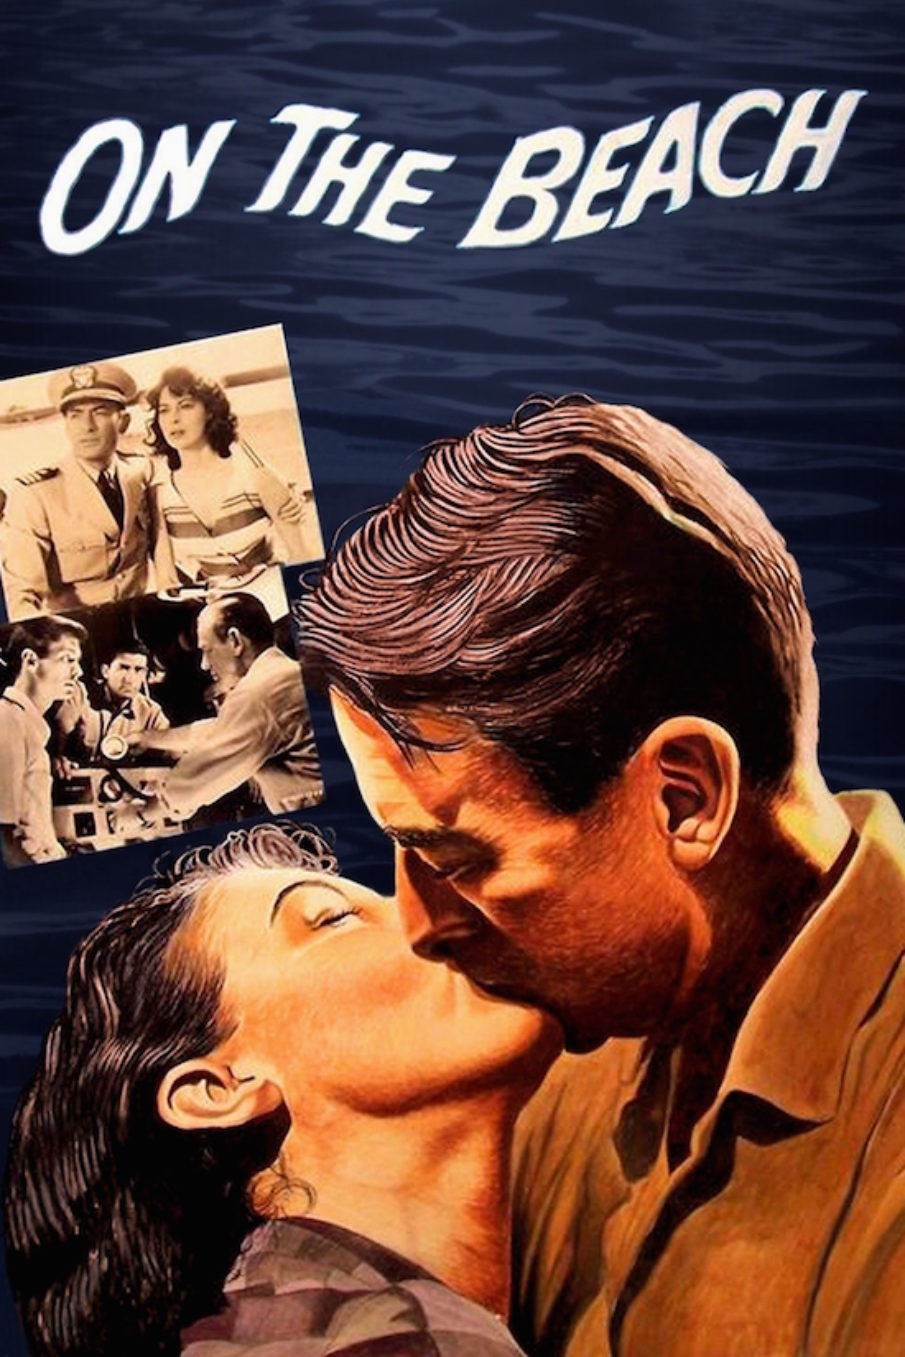 Movie Diary: On the Beach (1959)